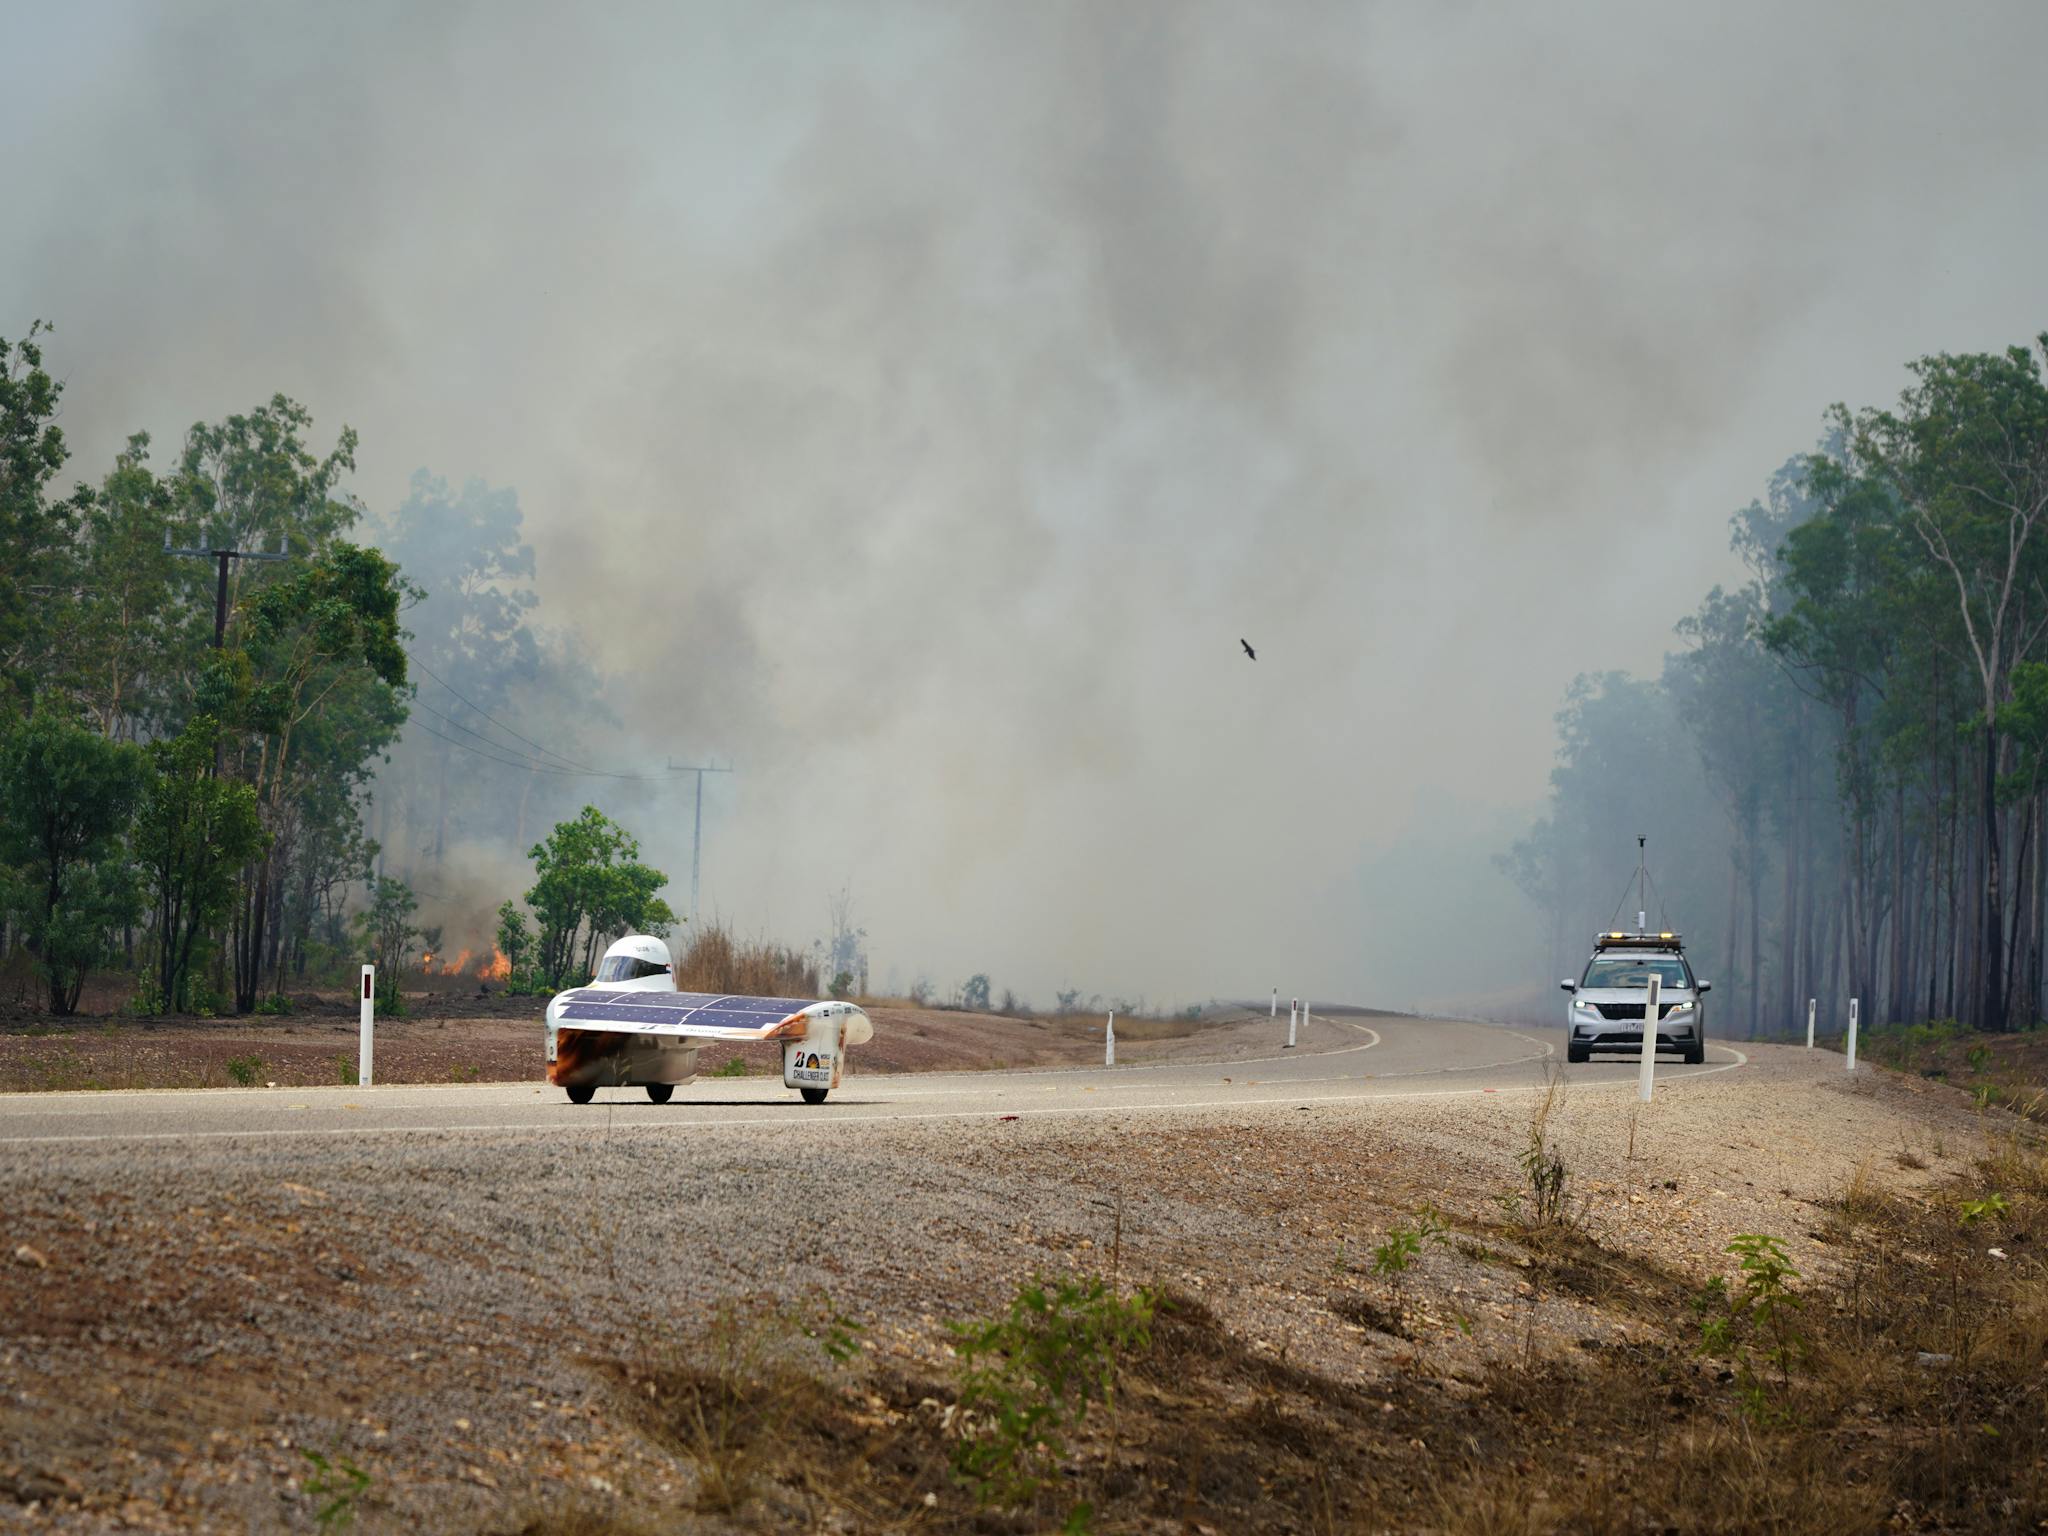 Nuna 12 driving through the smoke of the starting bushfire